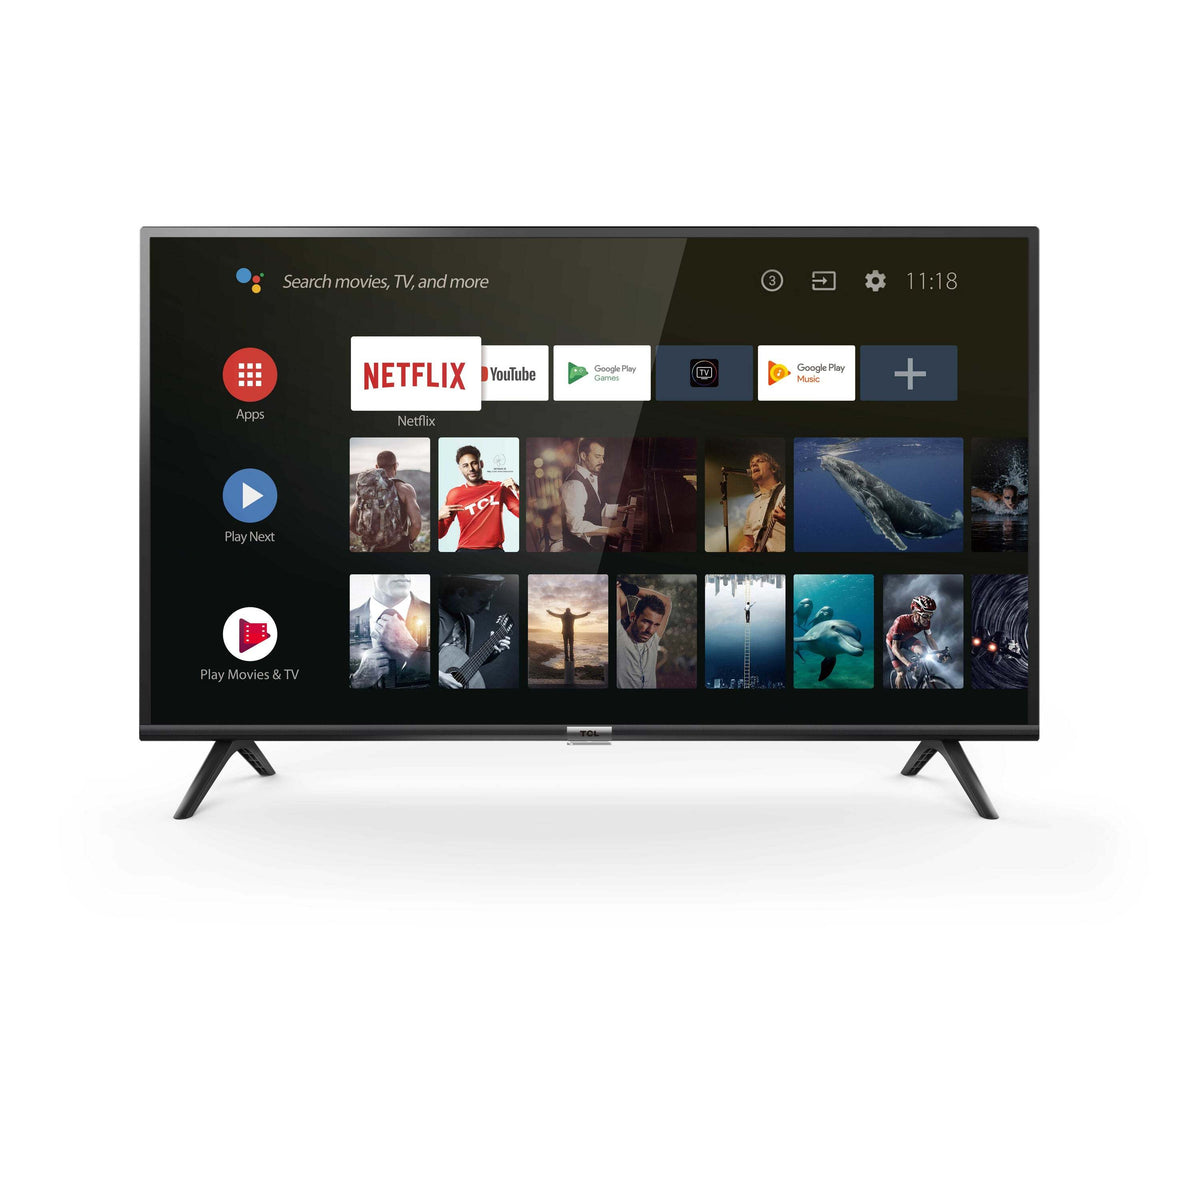 Smart televízor TCL 32ES560 (2019) / 32" (82 cm)